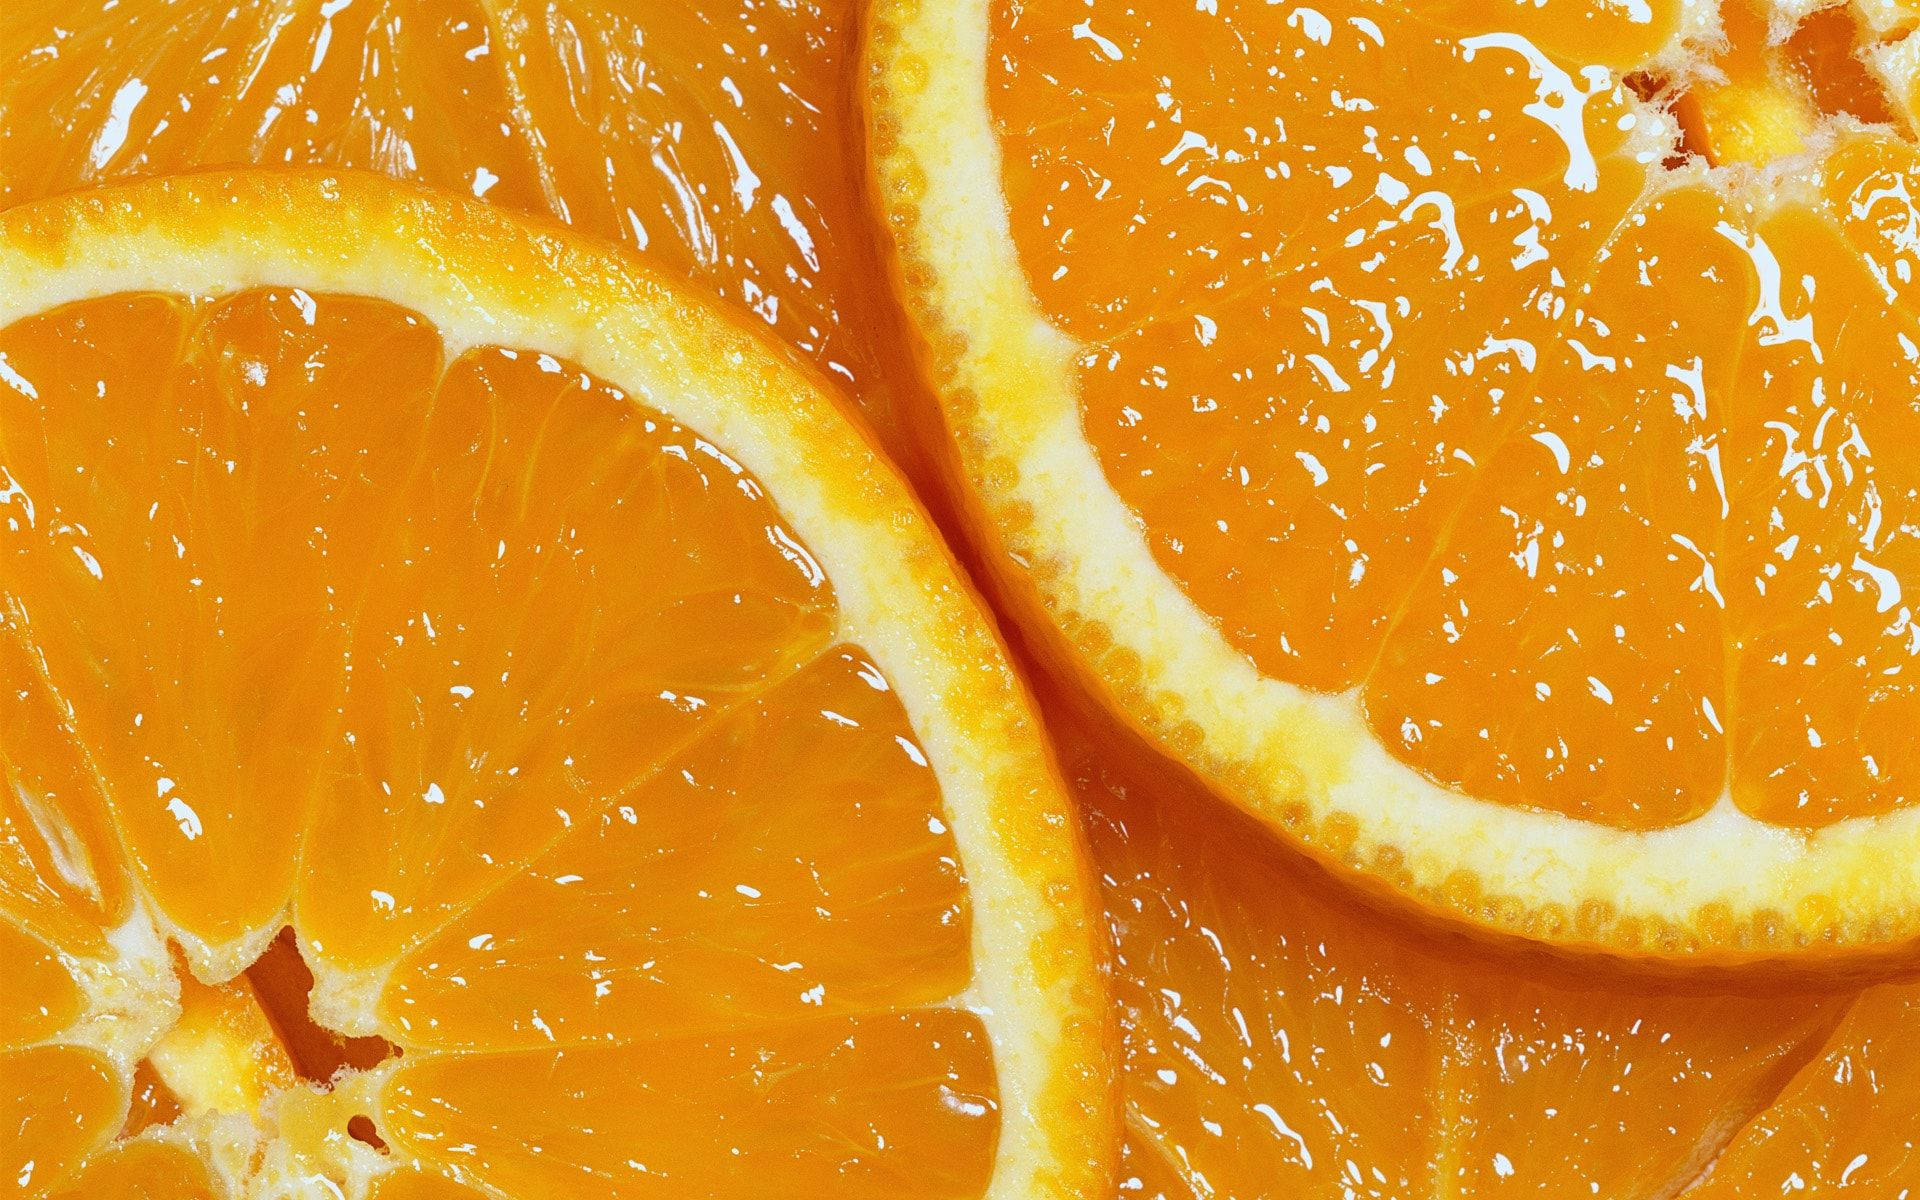 A vibrant section of juicy juicy orange fruit. Wallpaper